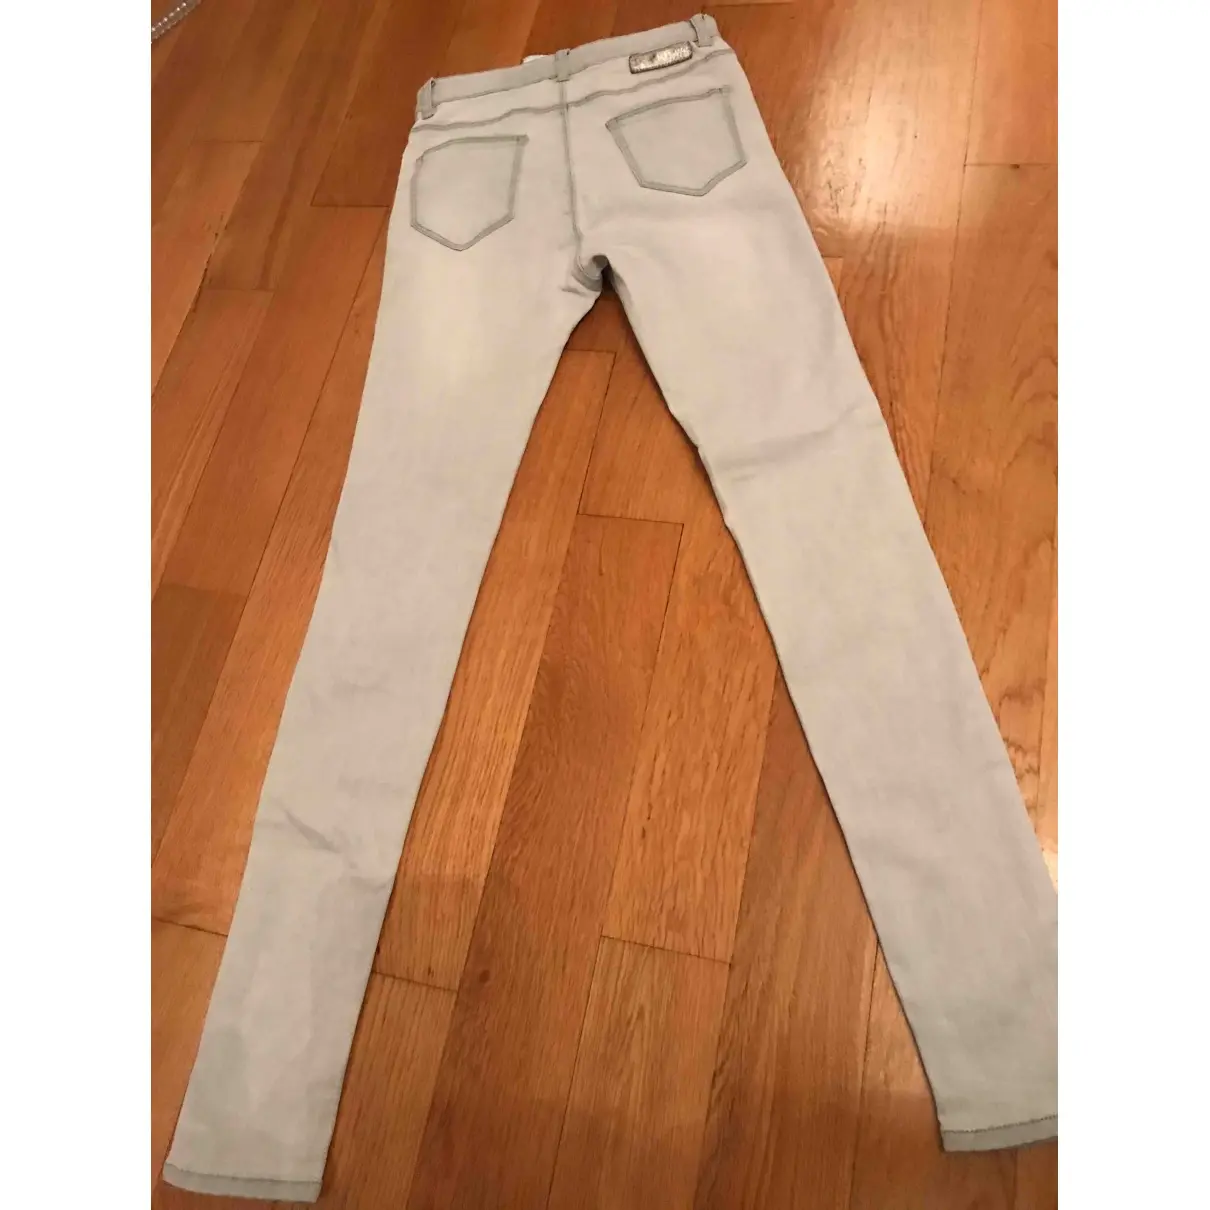 Ikks Grey Denim - Jeans Trousers for sale